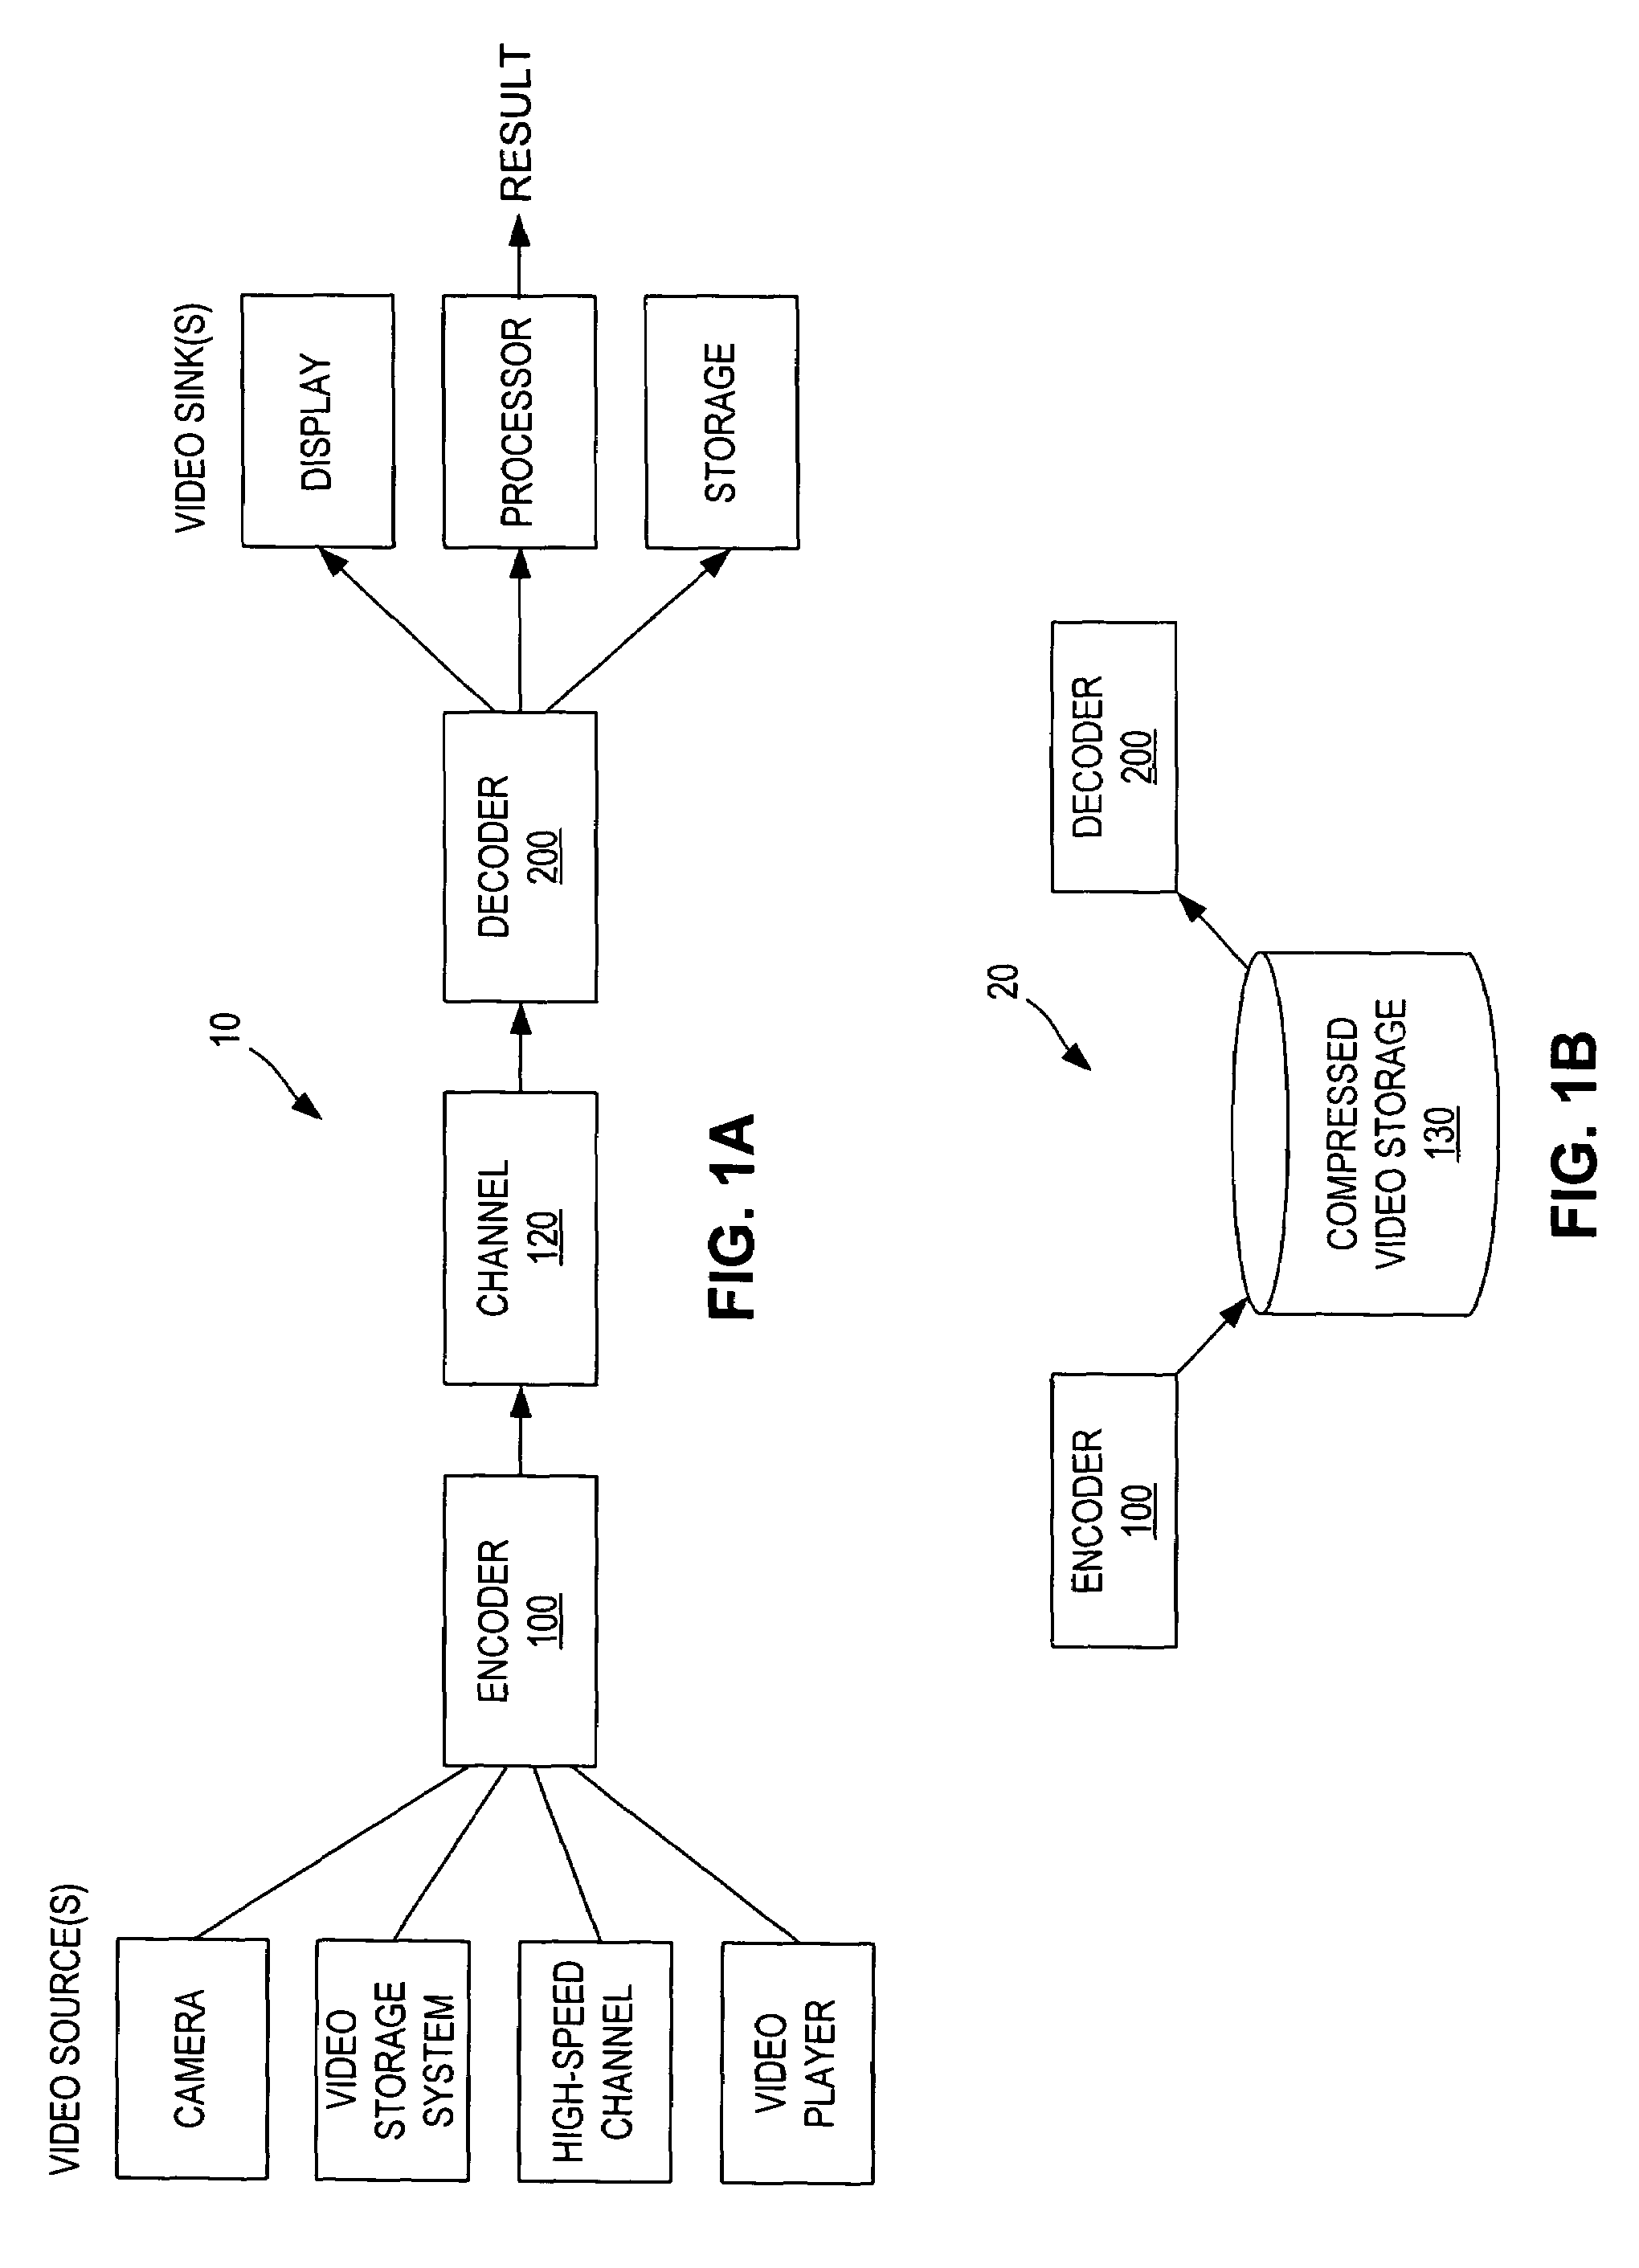 Decoder for decoding segment-based encoding of video data using segmentation performed at a decoder